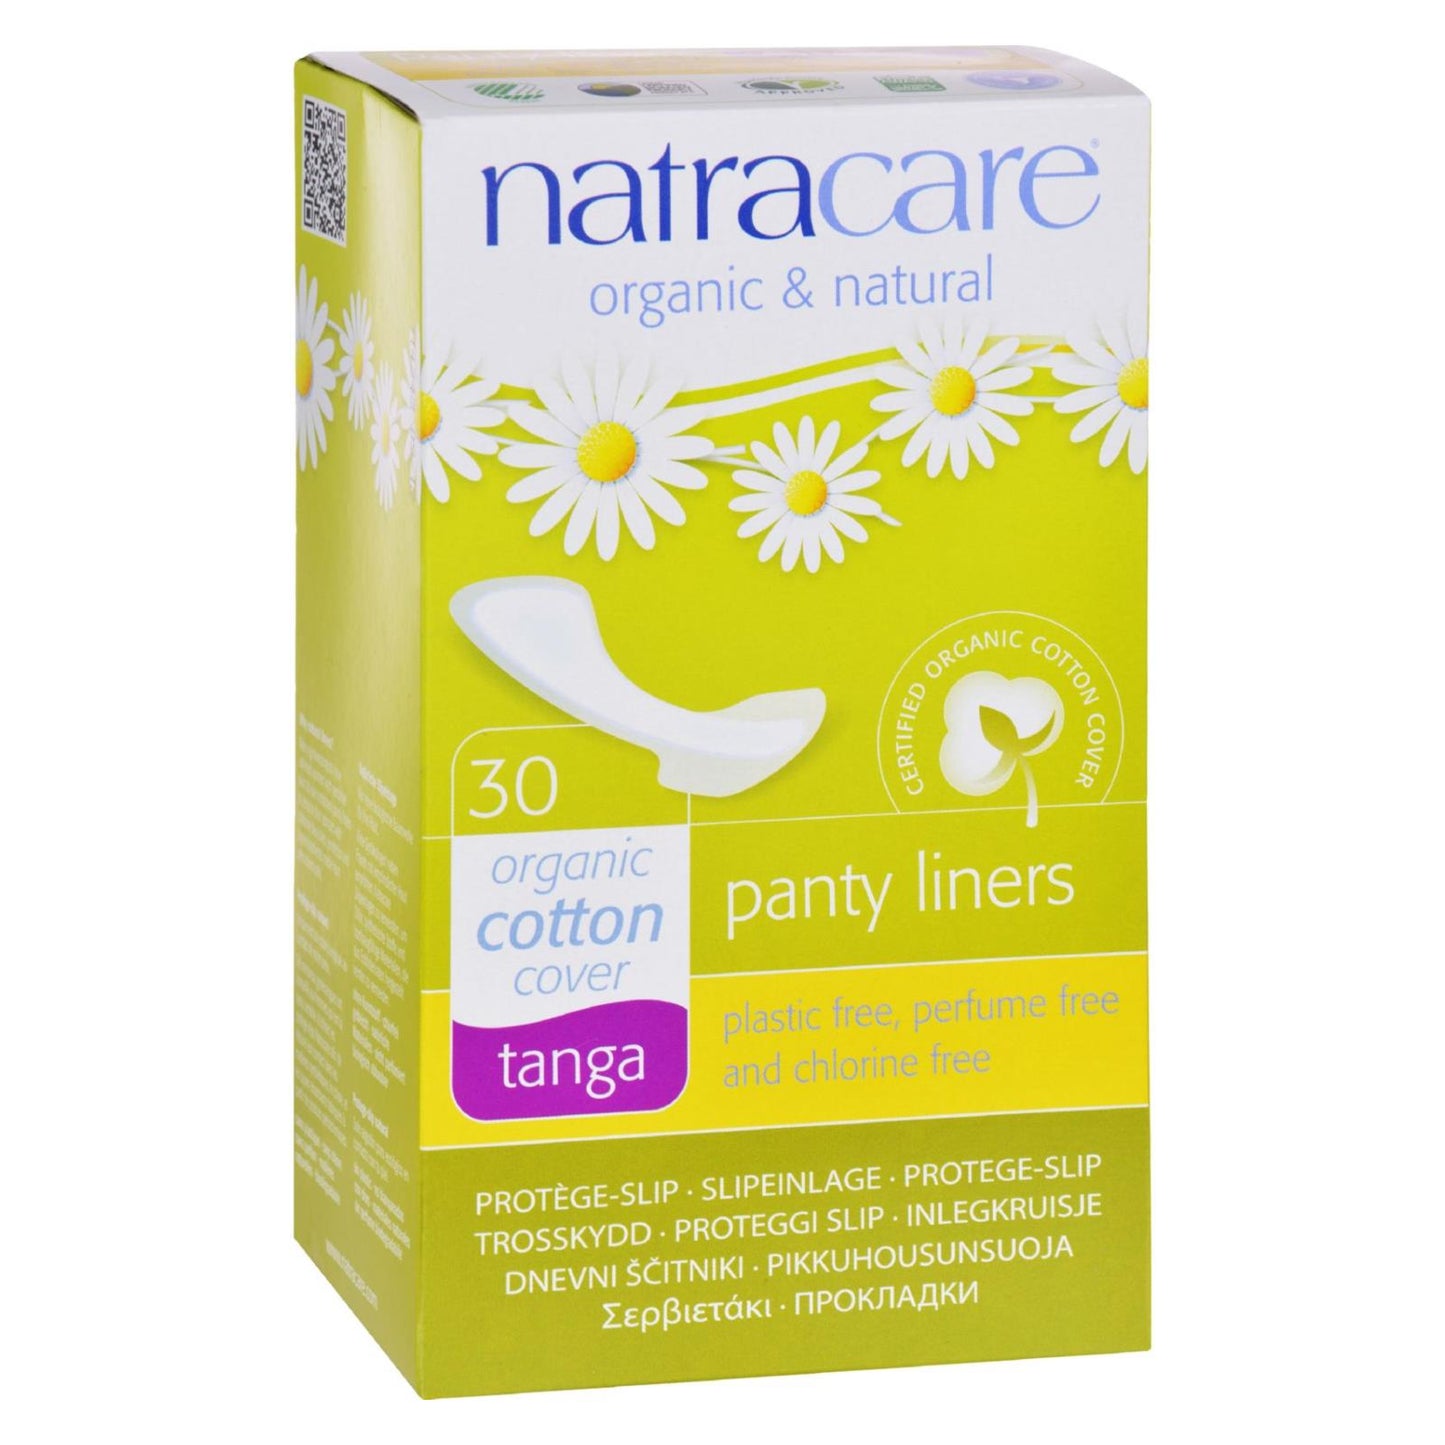 Natracare Natural Tanga Panty Liners, 30 count